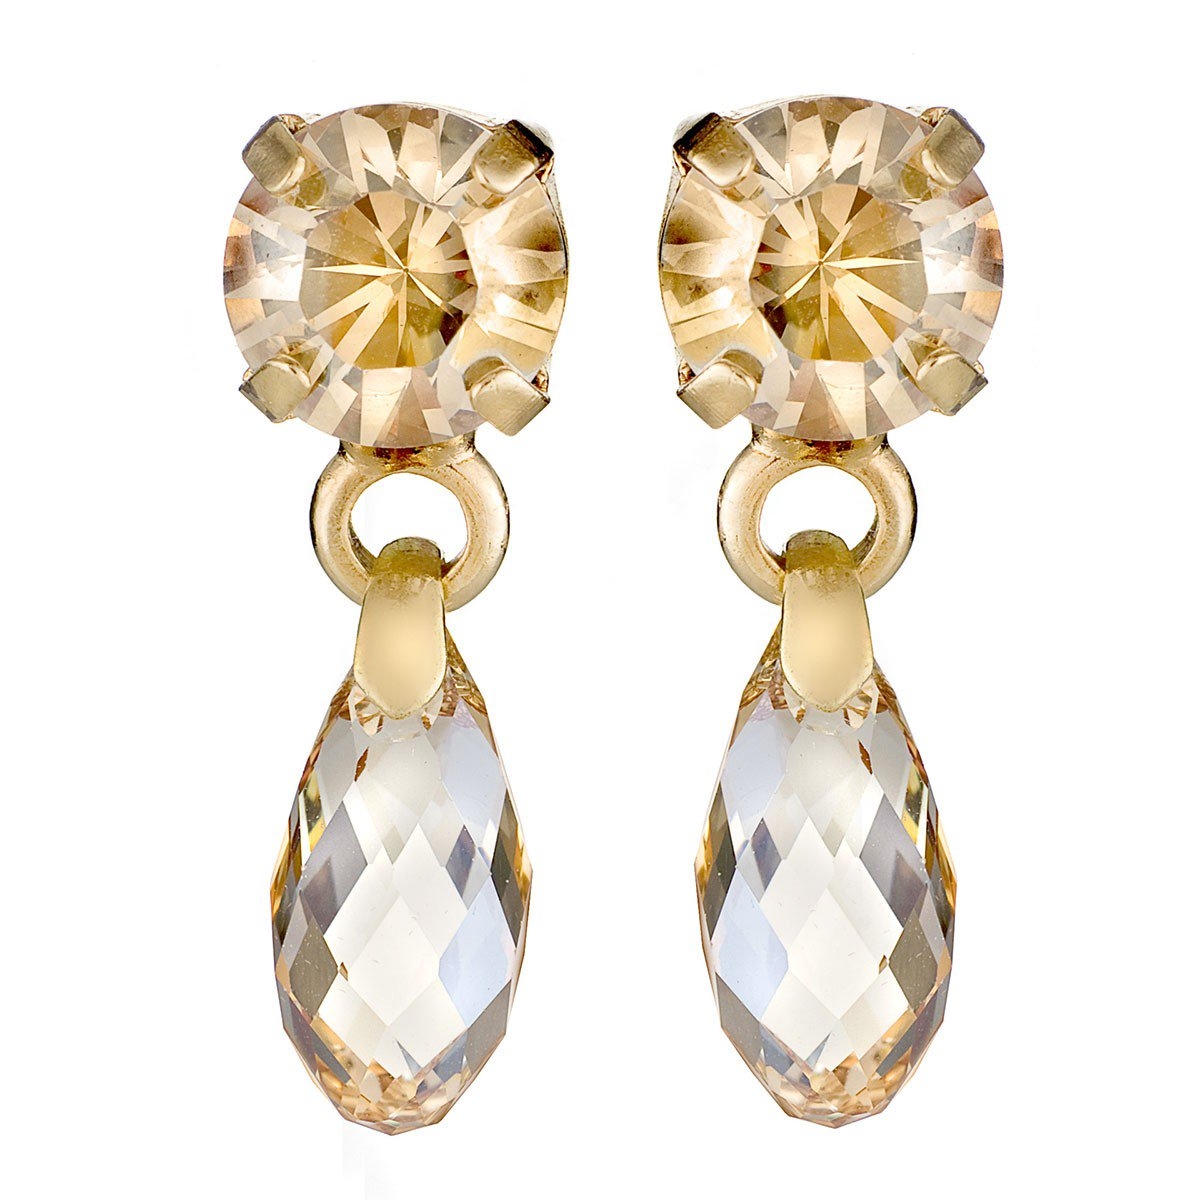 SEA Smadar Eliasaf Gold-Plated Teardrop Earrings with Swarovski Crystals - 1